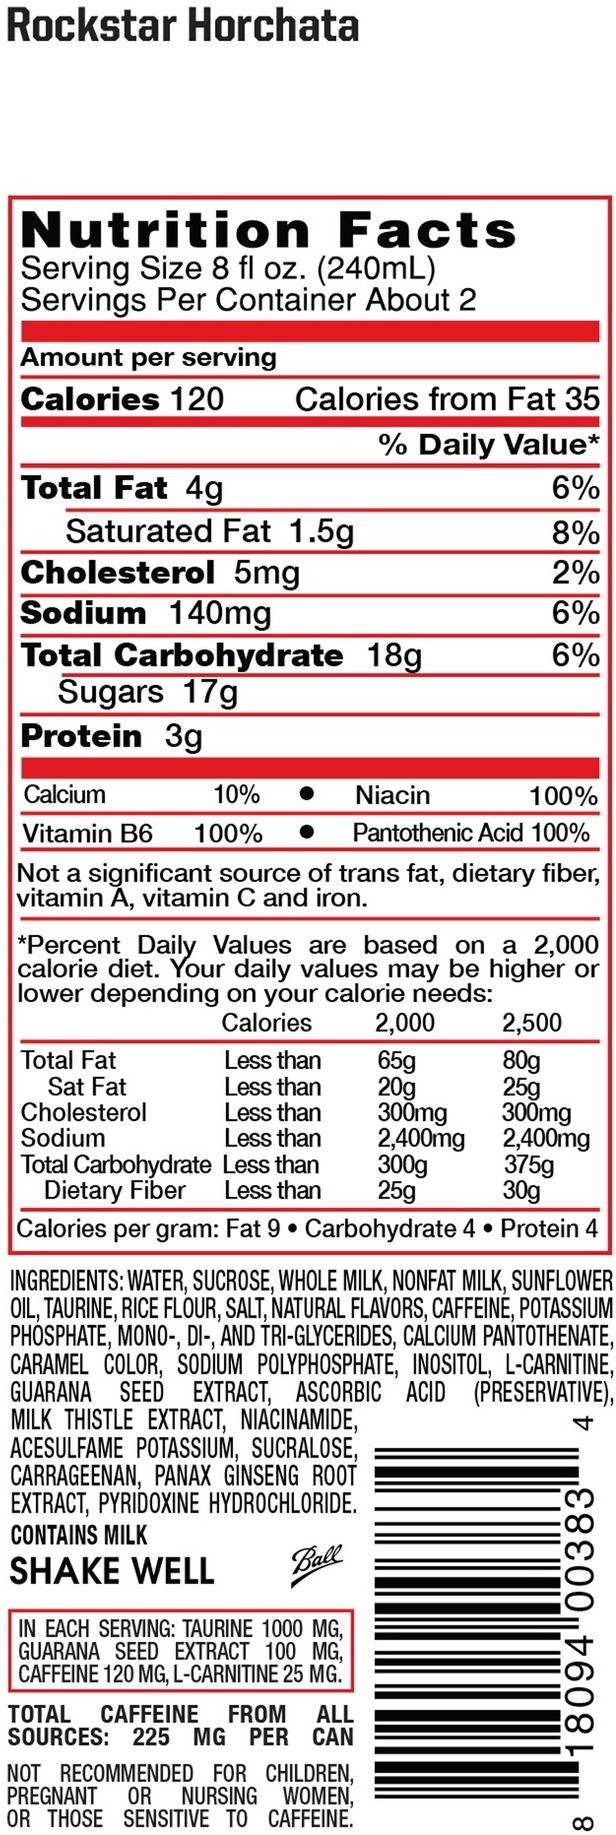 Image describing nutrition information for product Rockstar Horchata